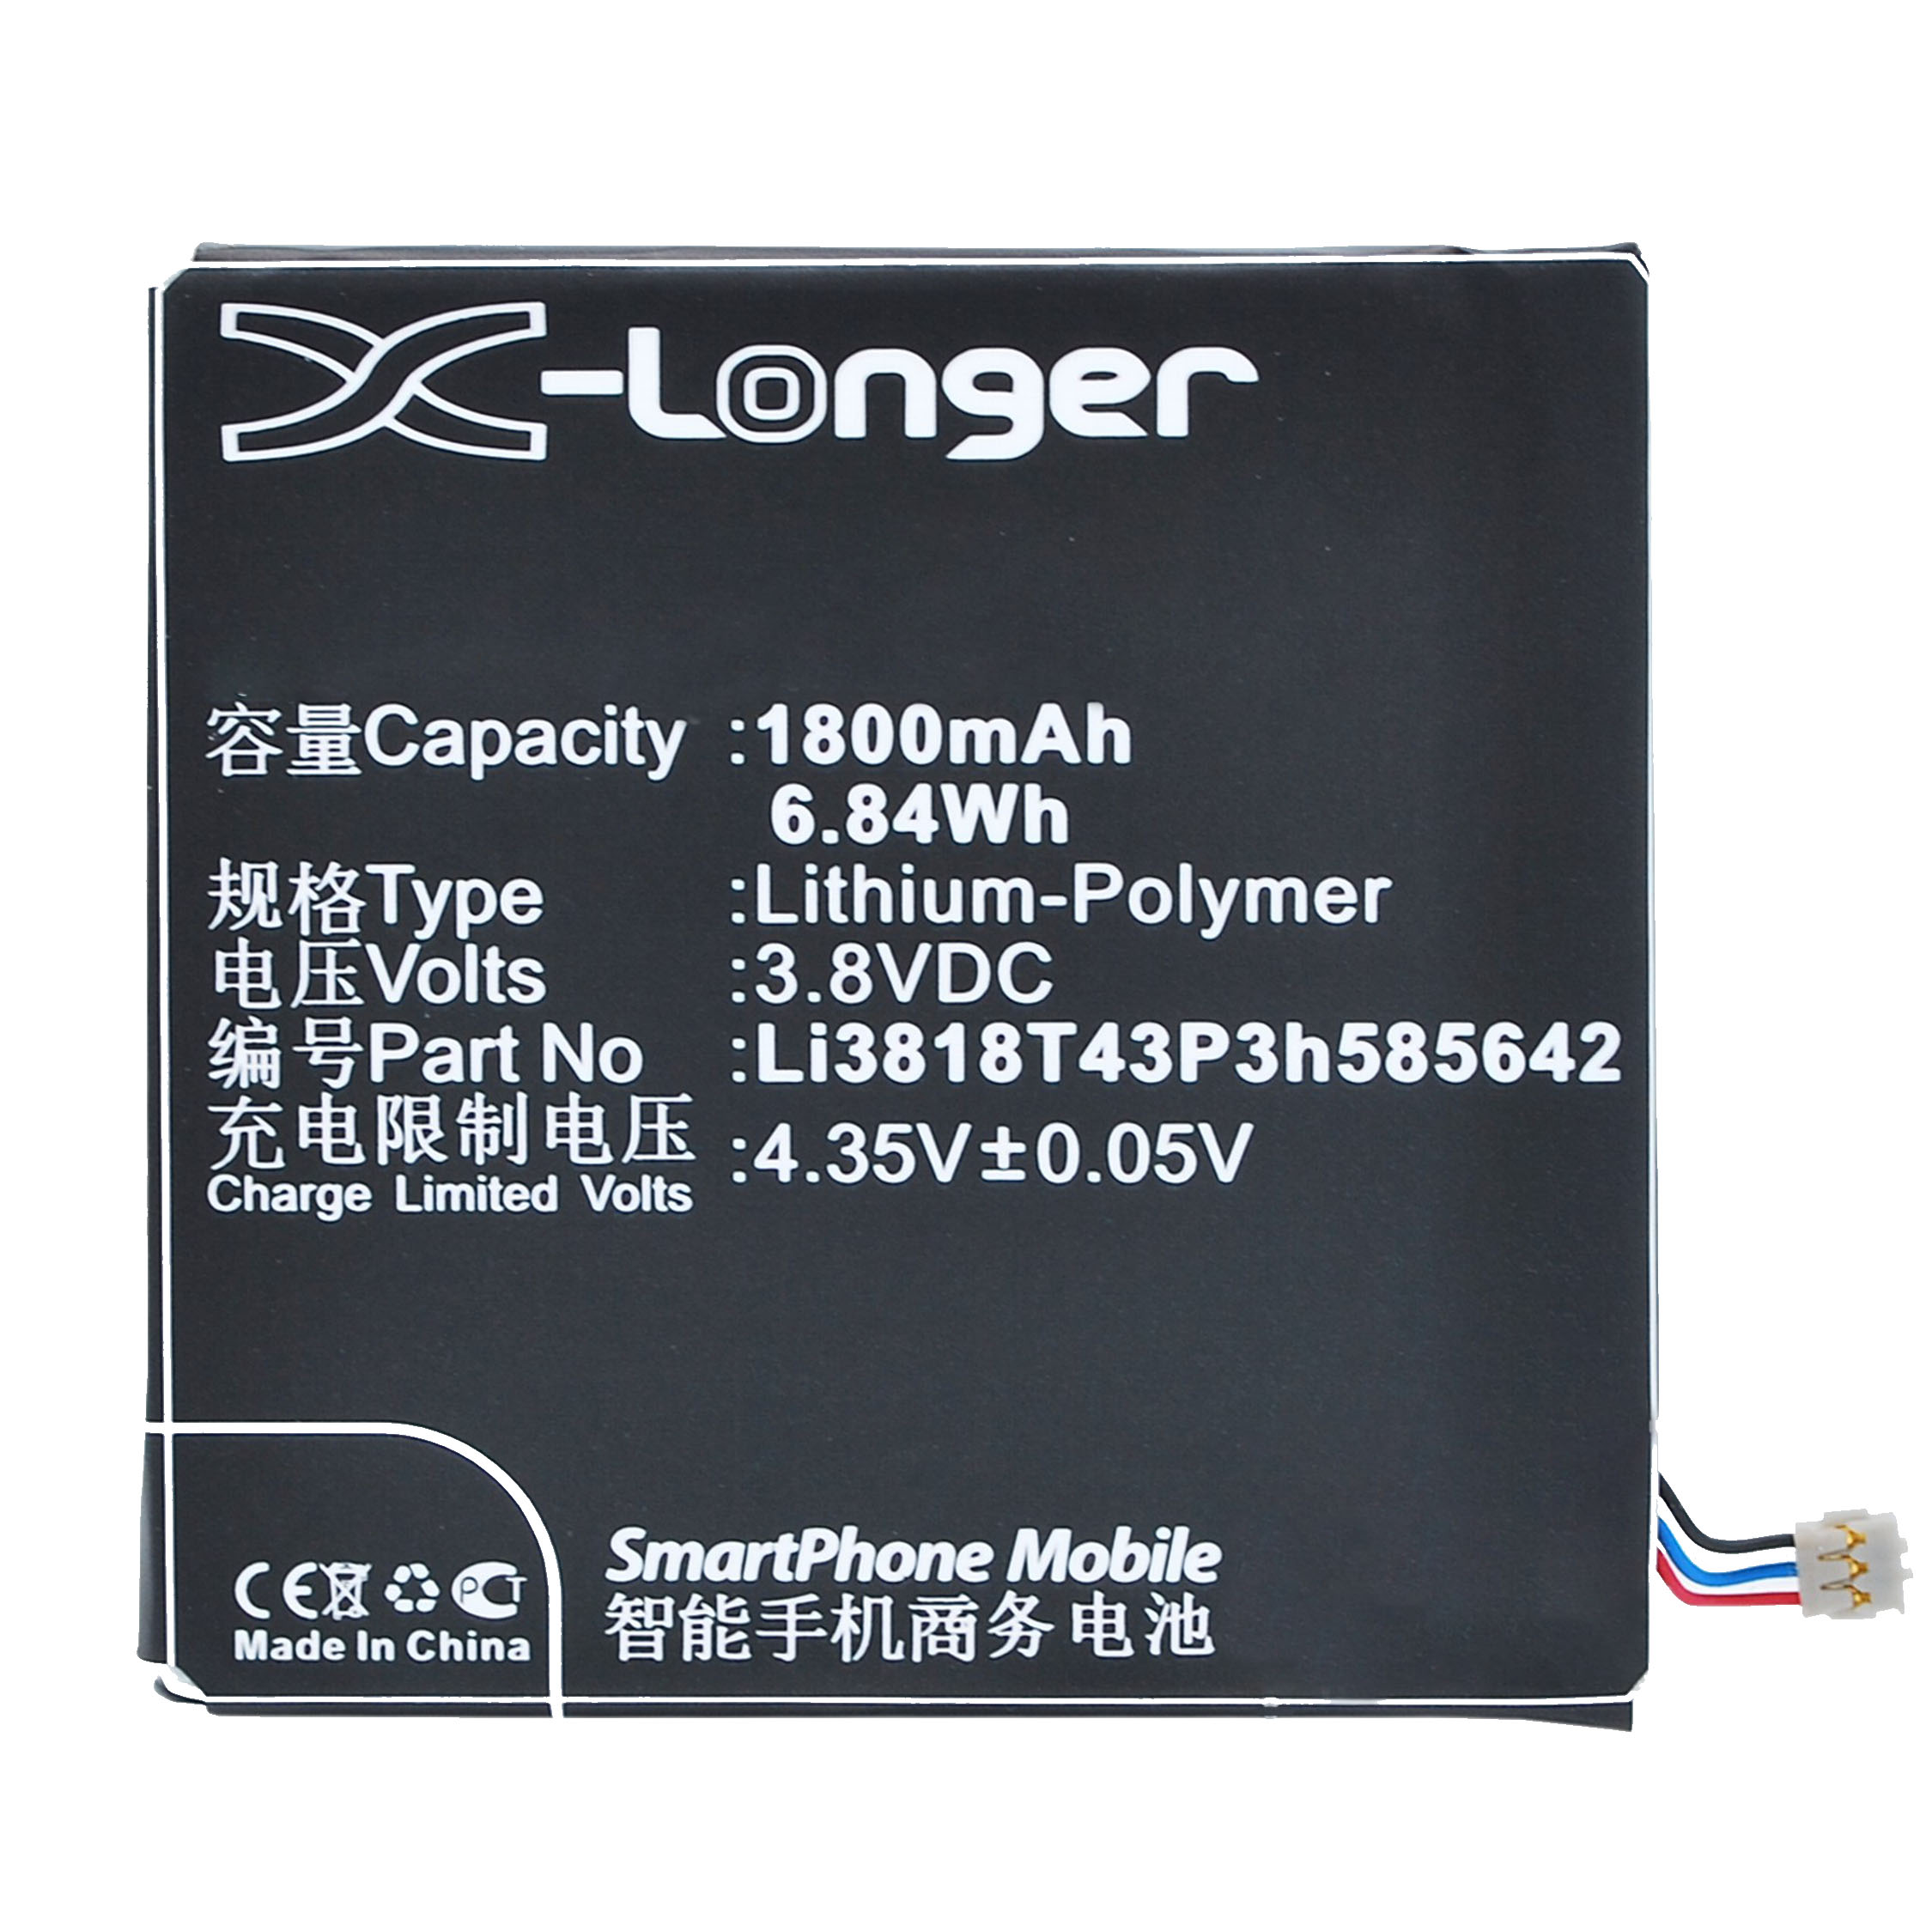 Synergy Digital Battery Compatible With ZTE Li3716T42P3h585642 Cellphone Battery - (Li-Pol, 3.8V, 1800 mAh / 6.84Wh)